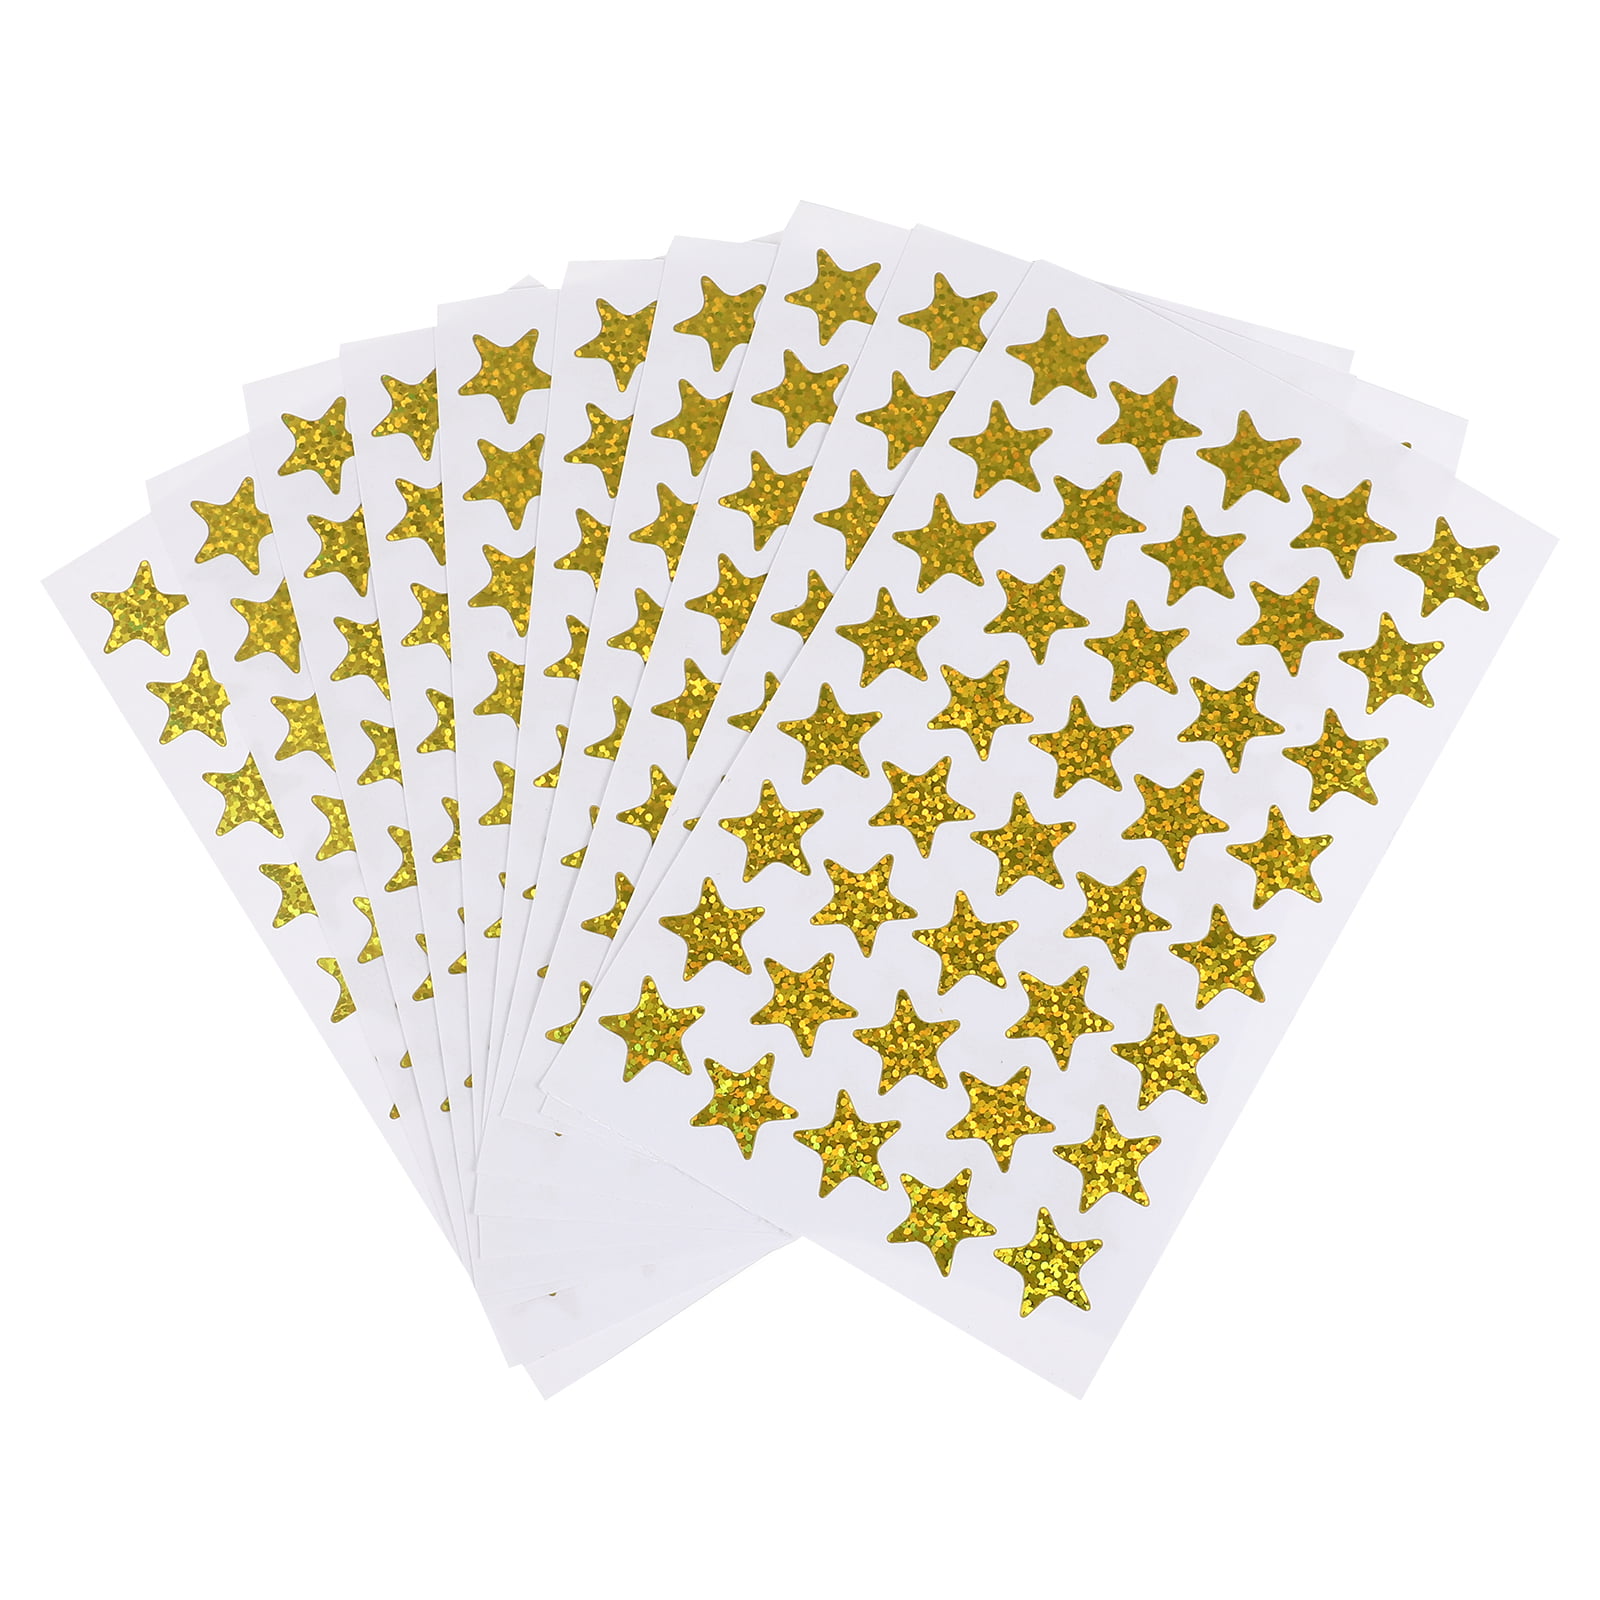 Operitacx 10 Sheets Star Stickers Children Reward Stickers Self Adhesive  Stickers Stars Gold Stars Stickers Small Kids Reward Stickers Sticker for